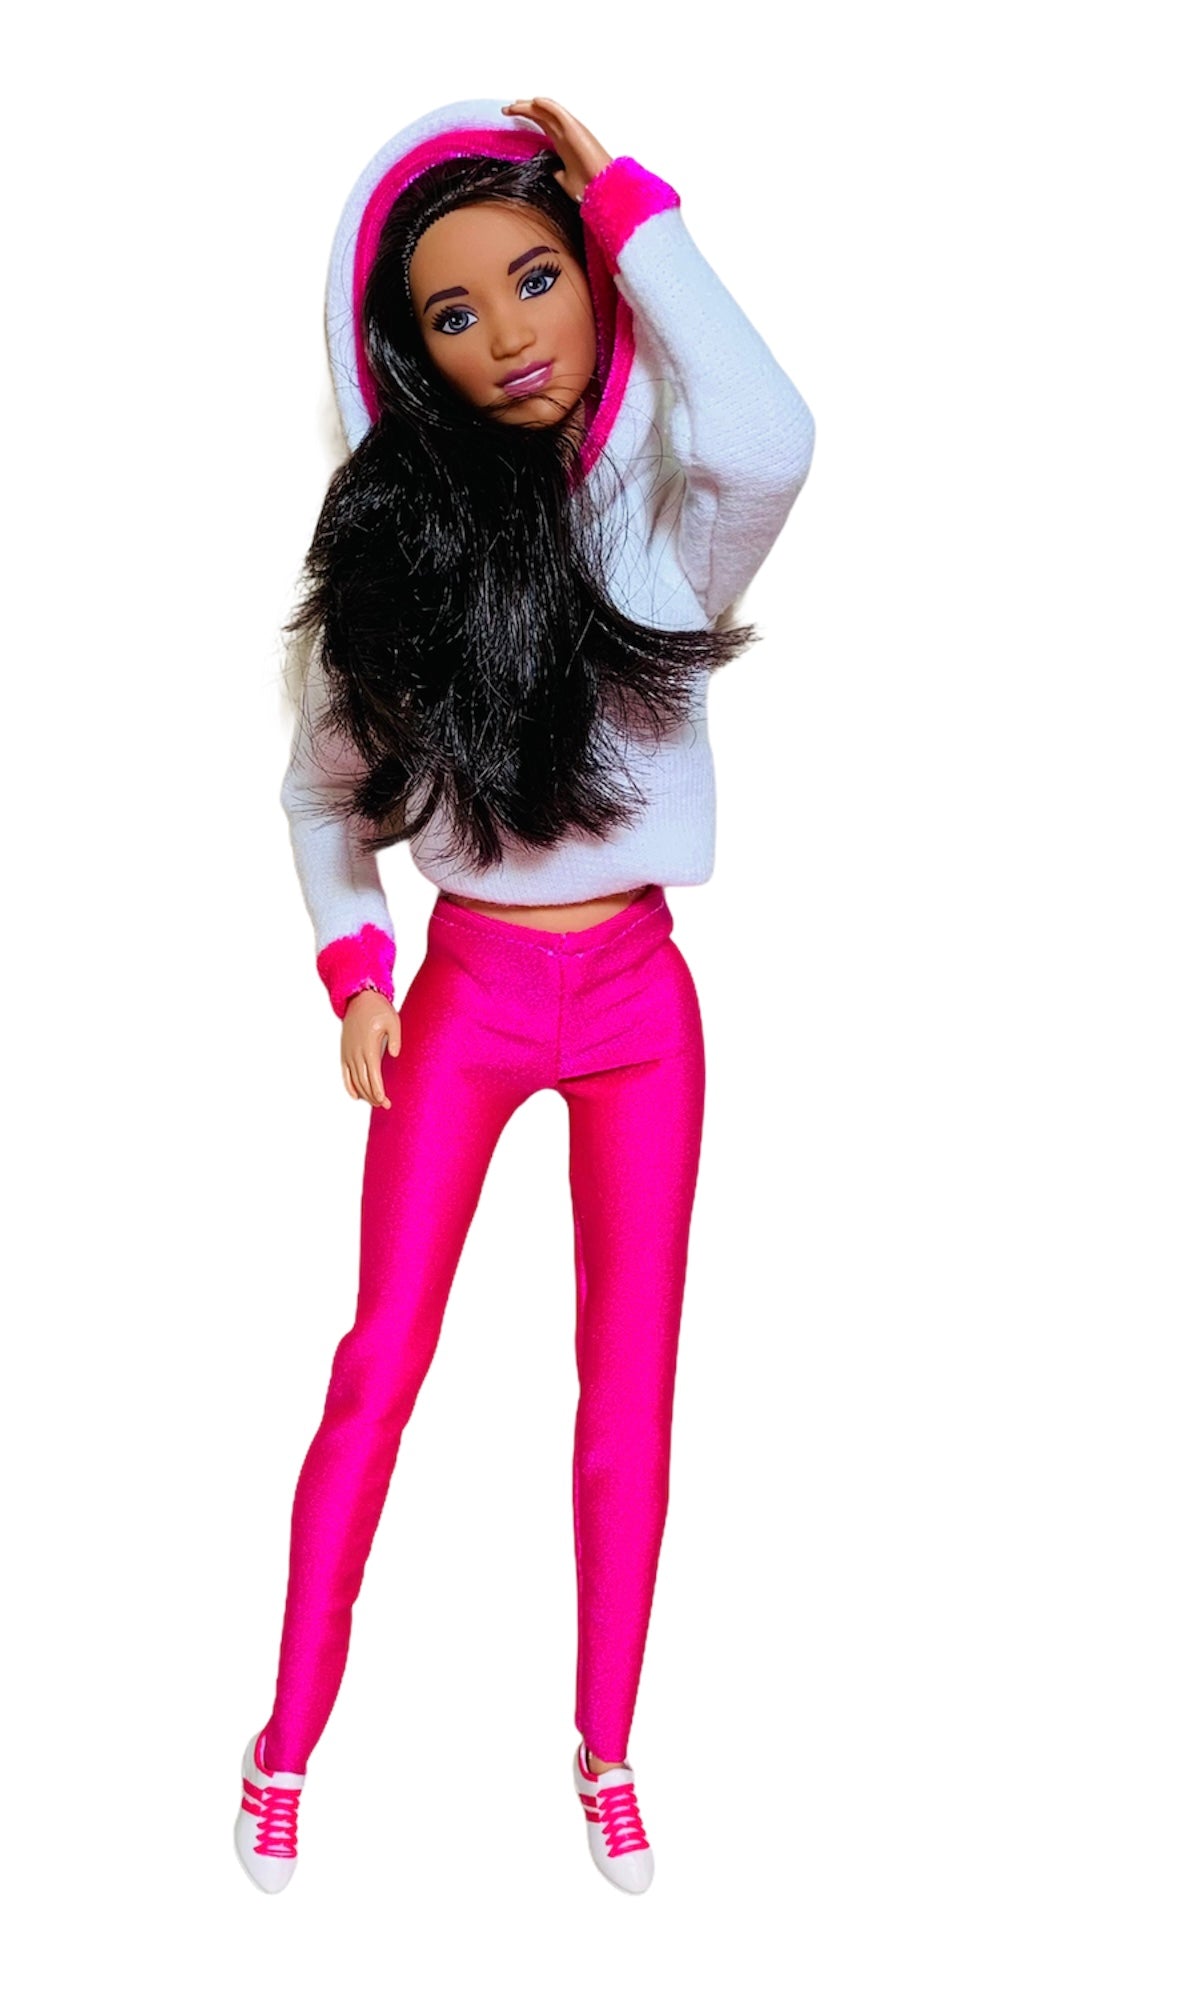 Barbie pink hollow cut leggings